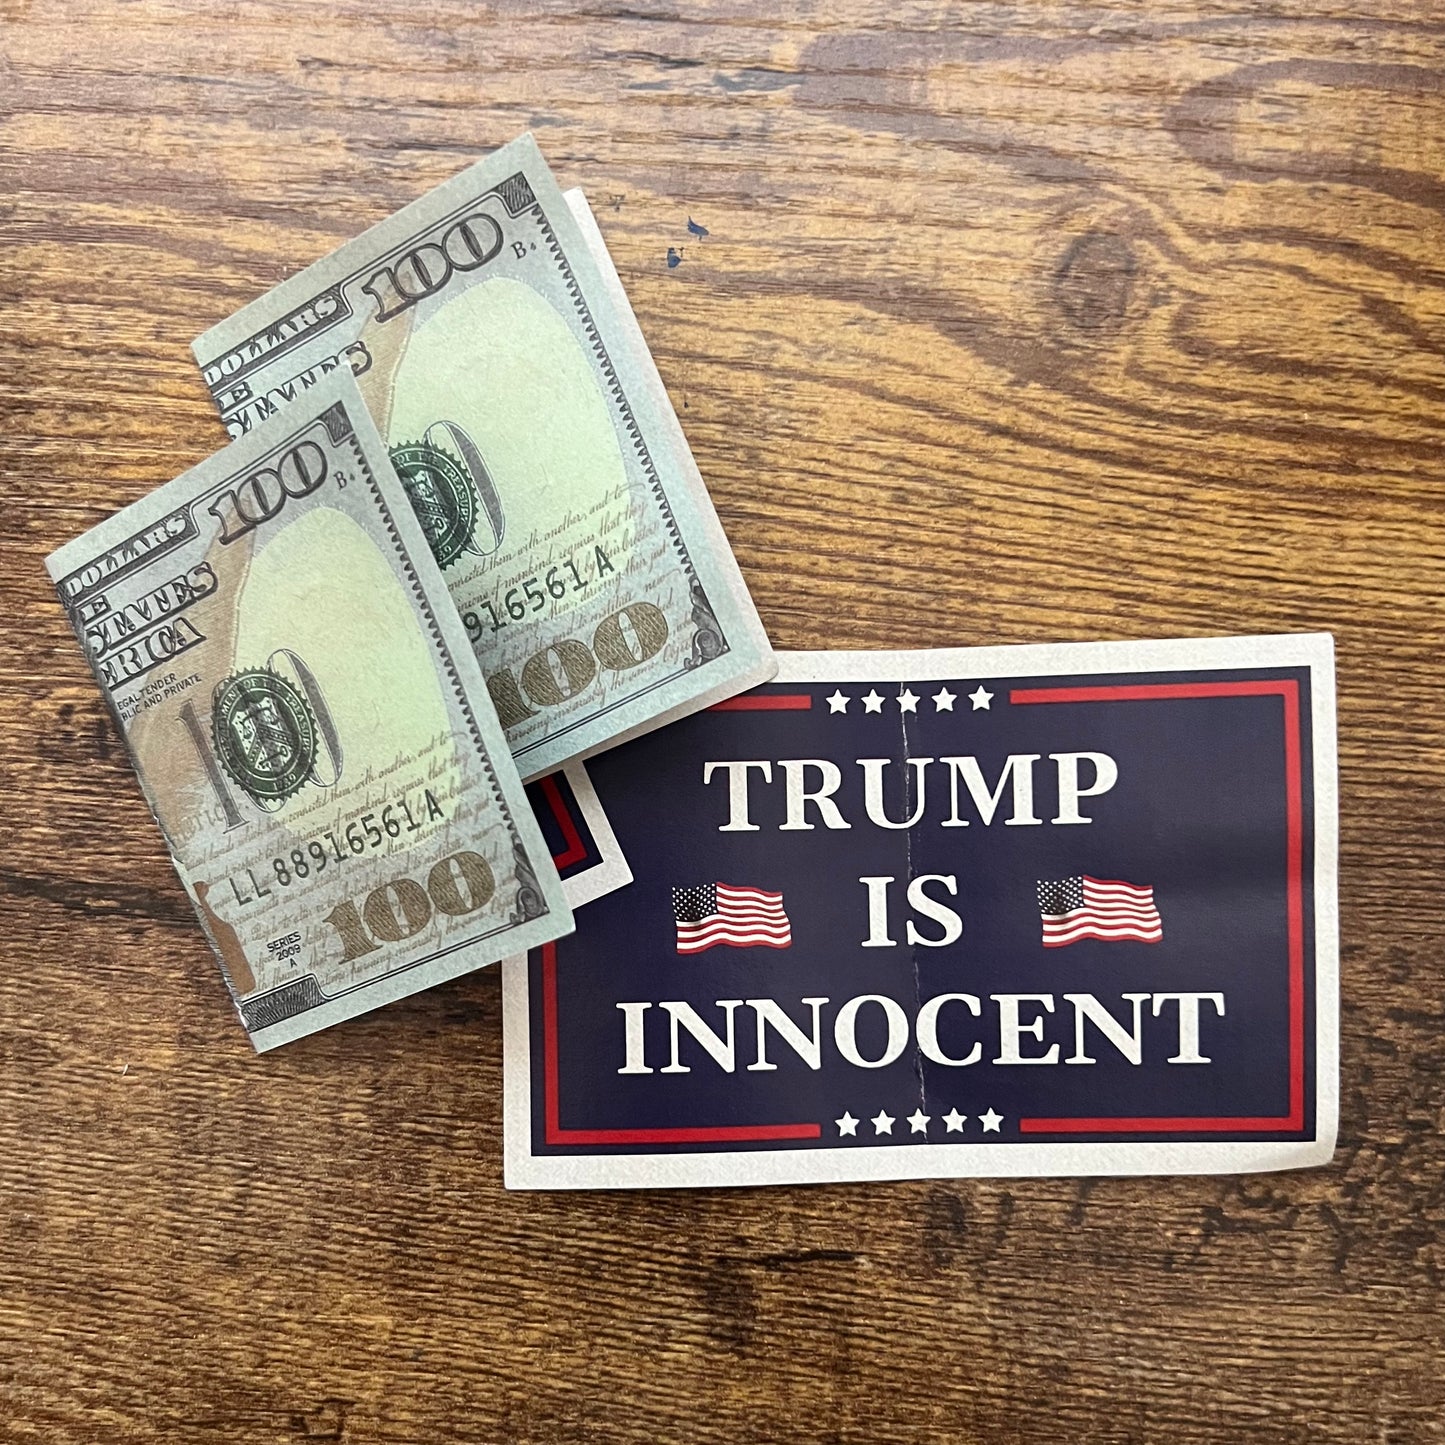 "Trump is Innocent" Bills